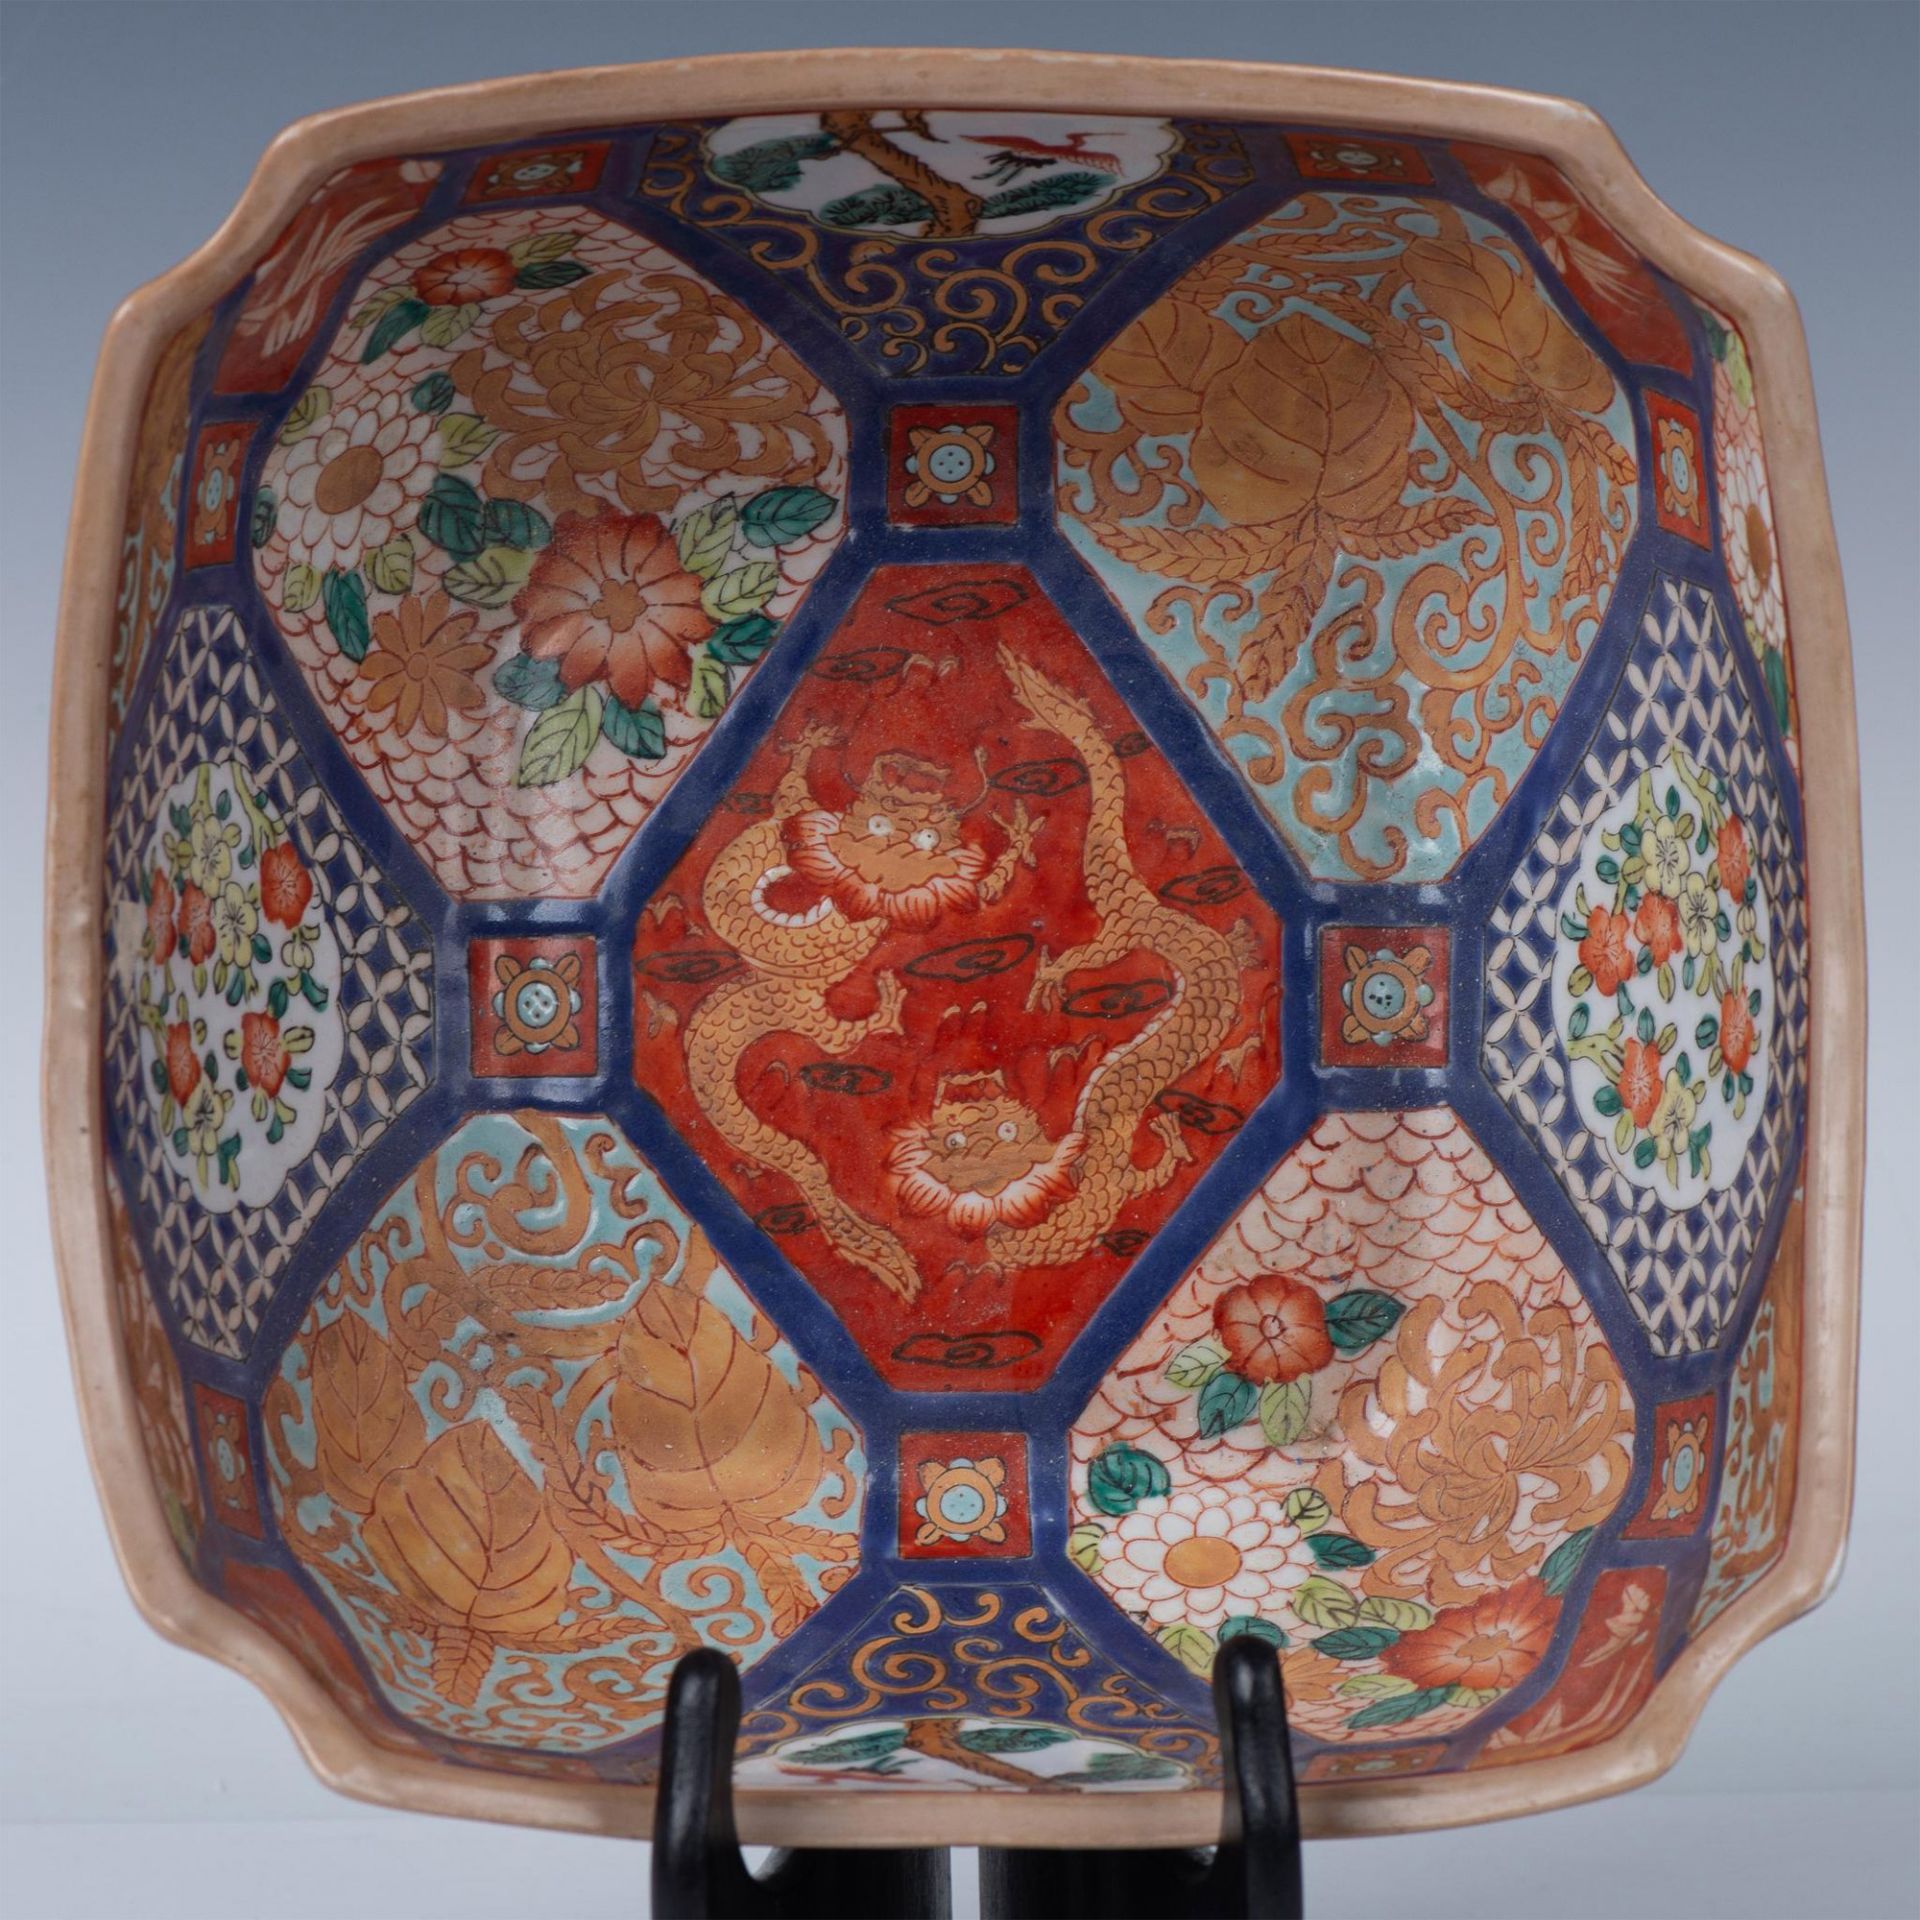 Chinese Ceramic Bowl, Foo Dogs, Cranes, Blue Bird - Image 3 of 4